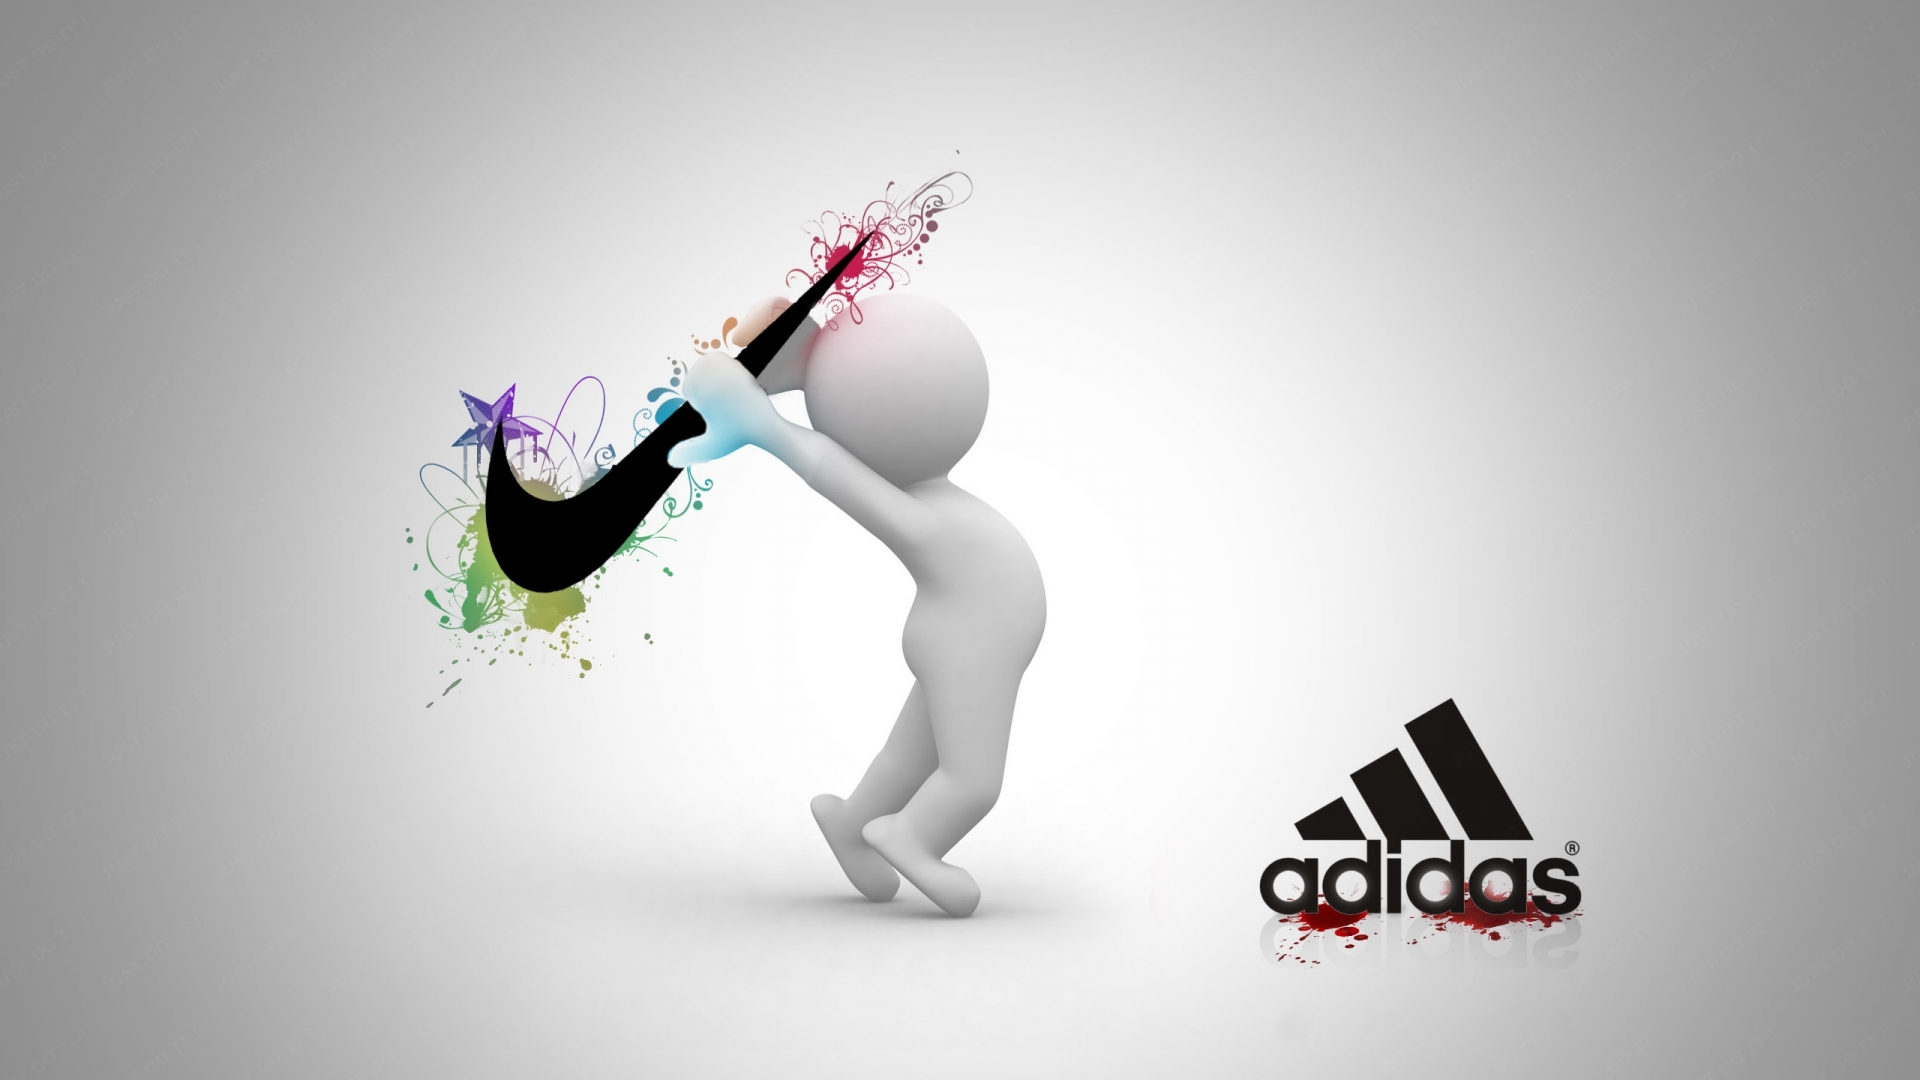 nike-vs-adidas-images-wallpaper